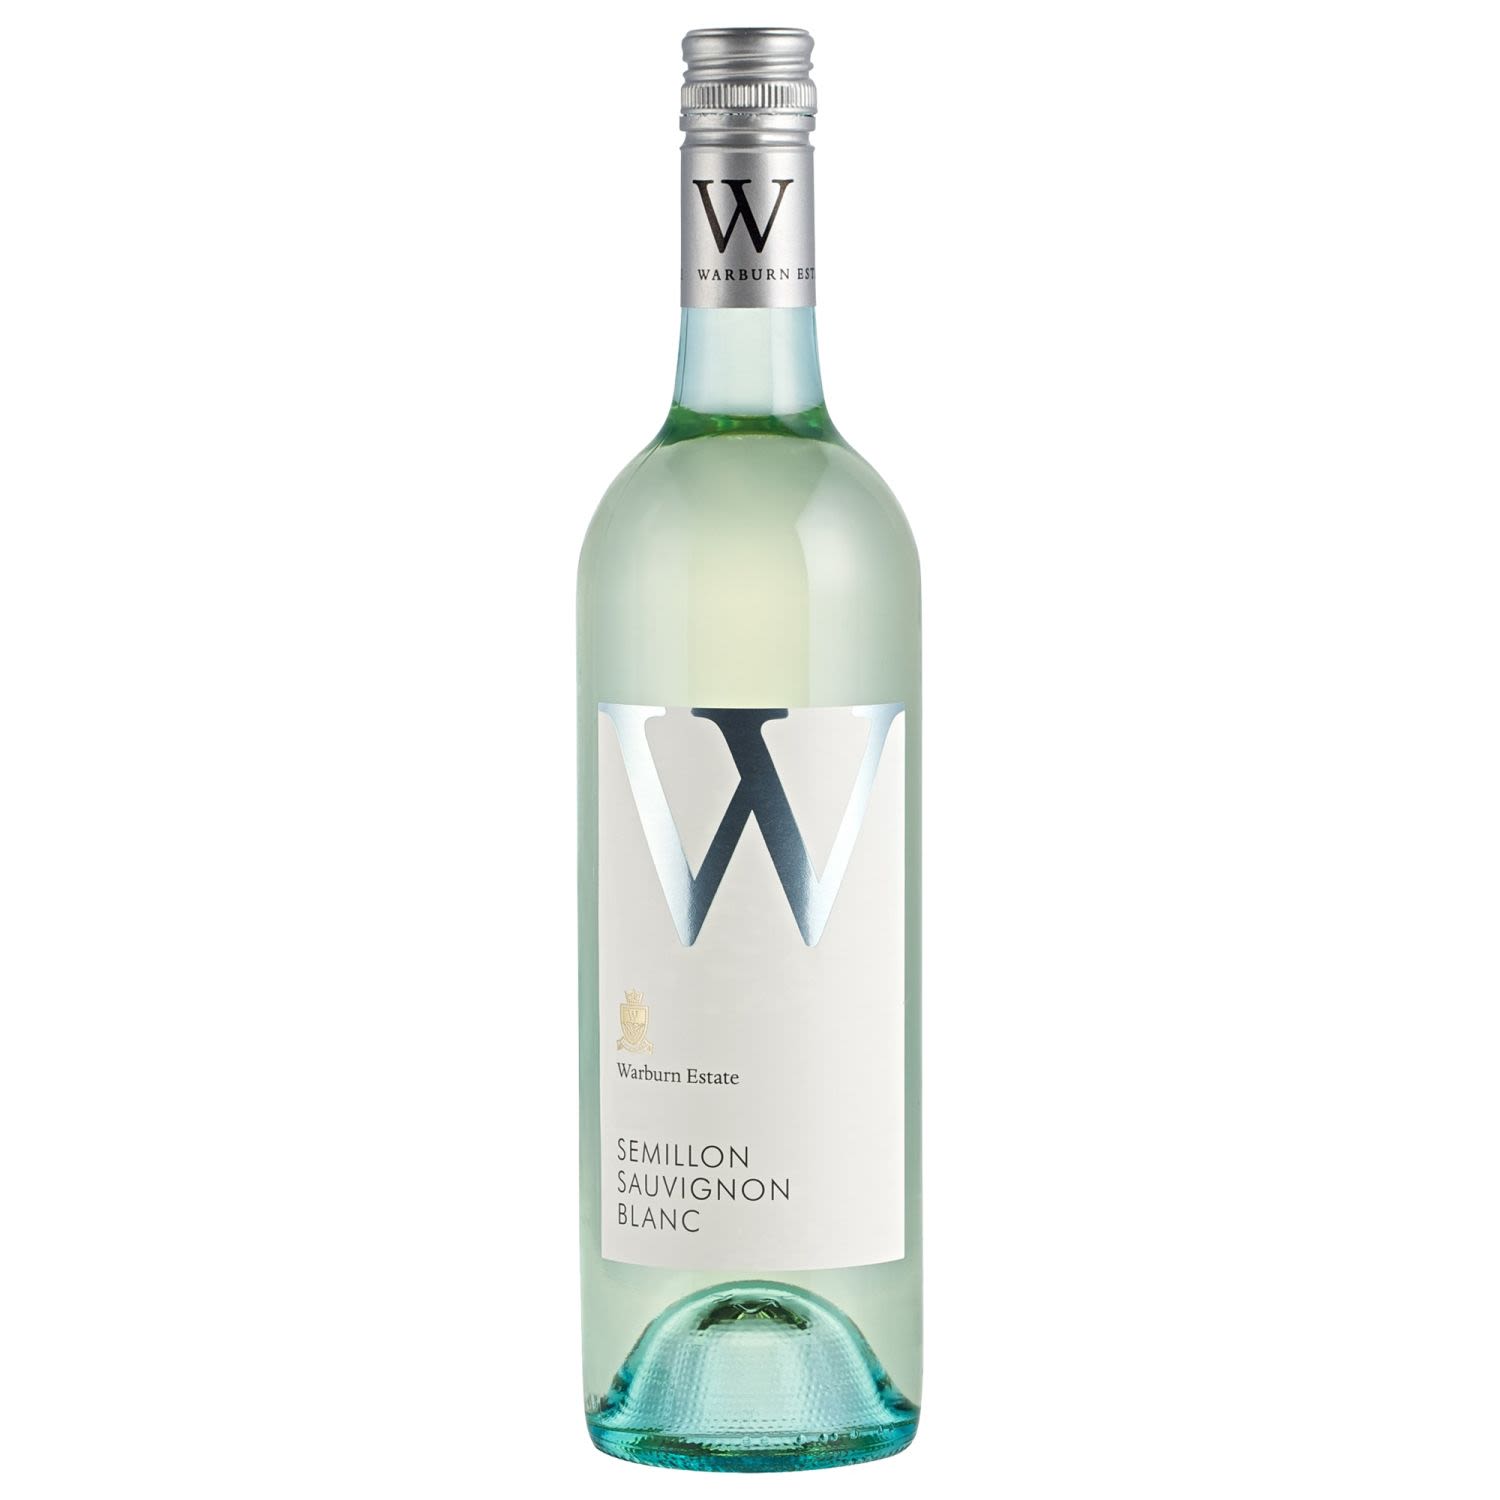 Warburn Premium Reserve Semillon Sauvignon Blanc 750mL Bottle